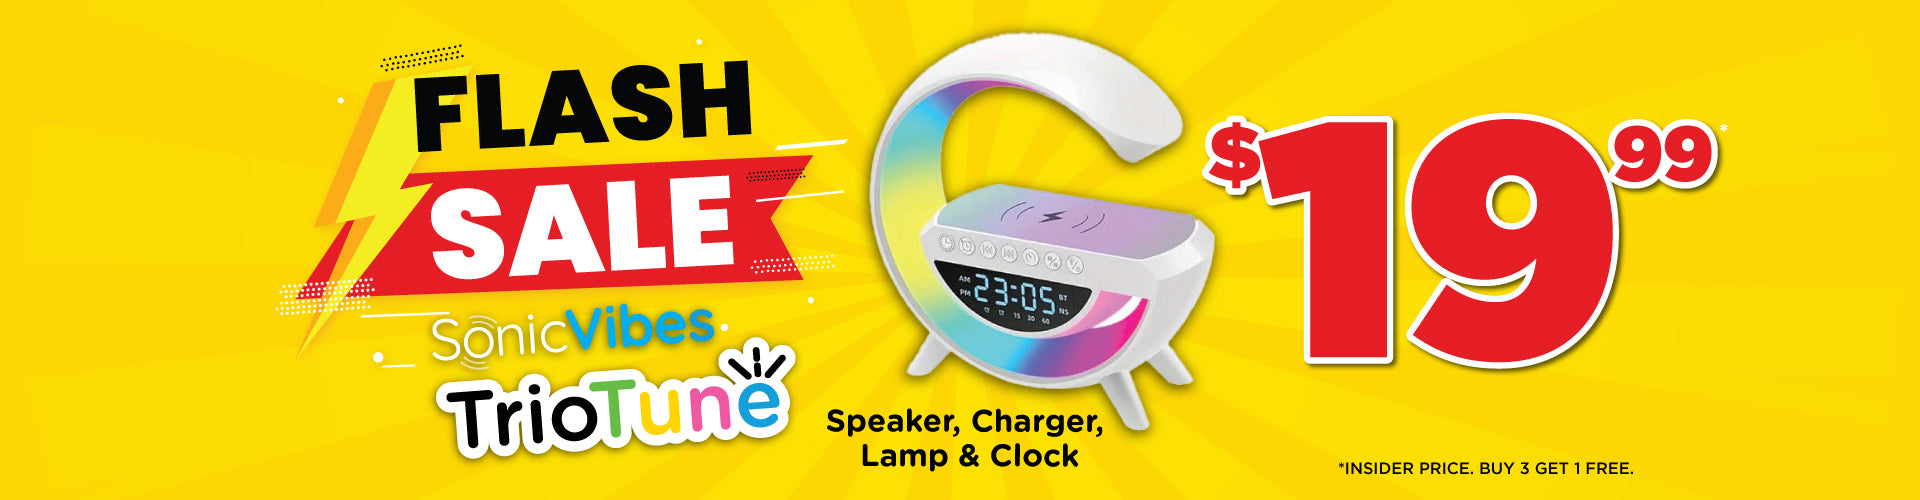 TrioTune Phone Charger Speaker Flash Sale